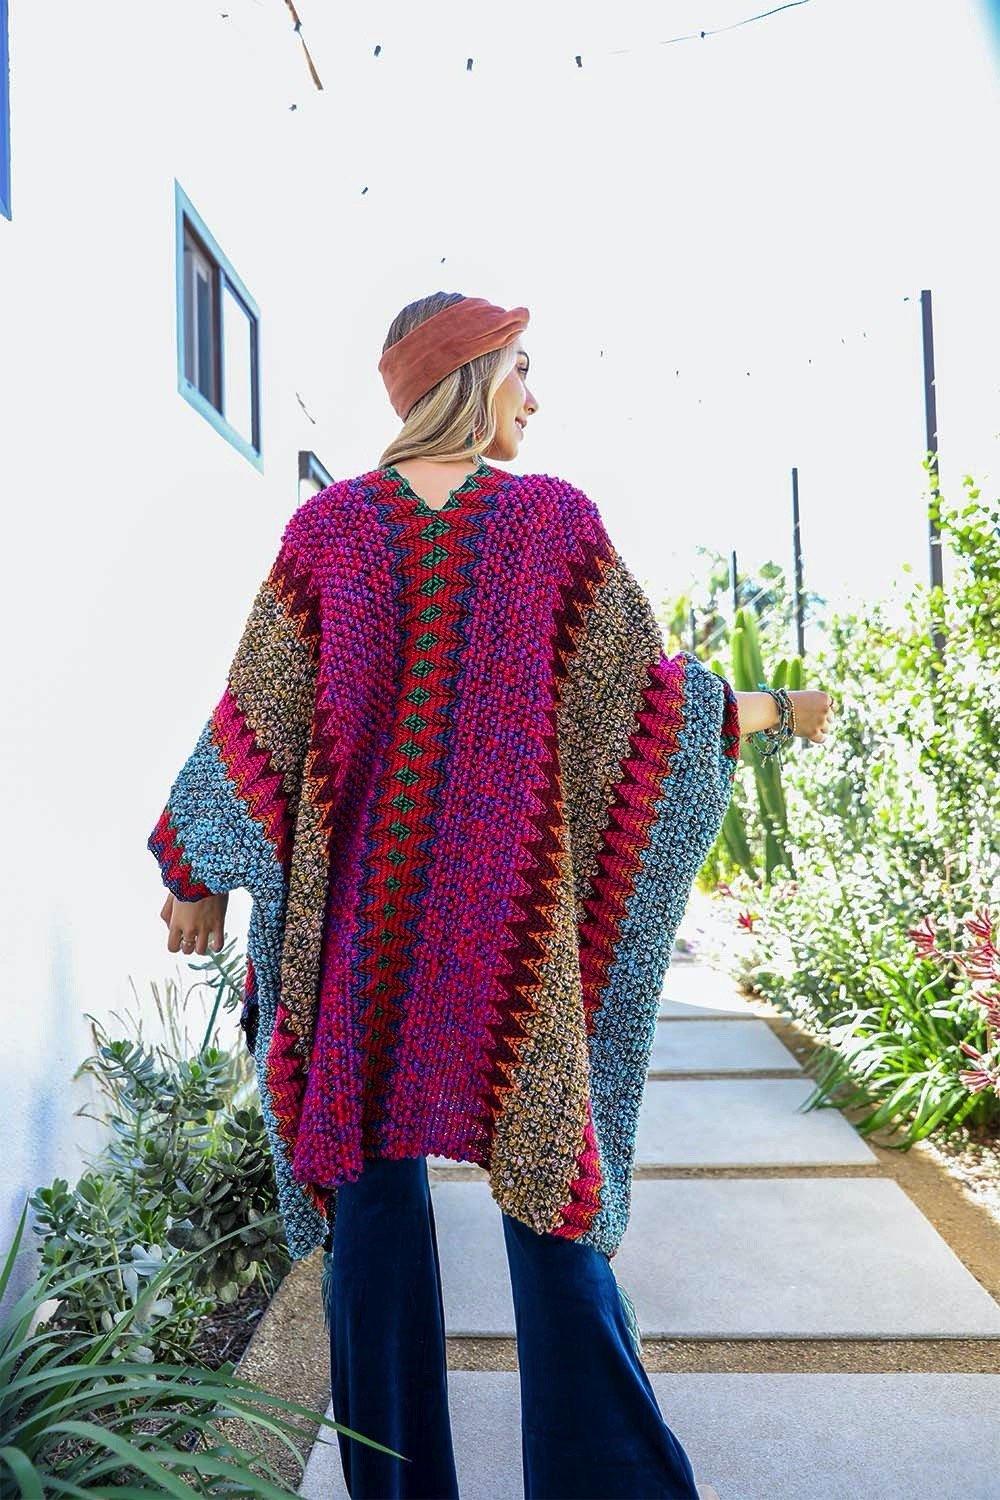 Cuddle Season Crochet Patterned Ruana - Brand My Case